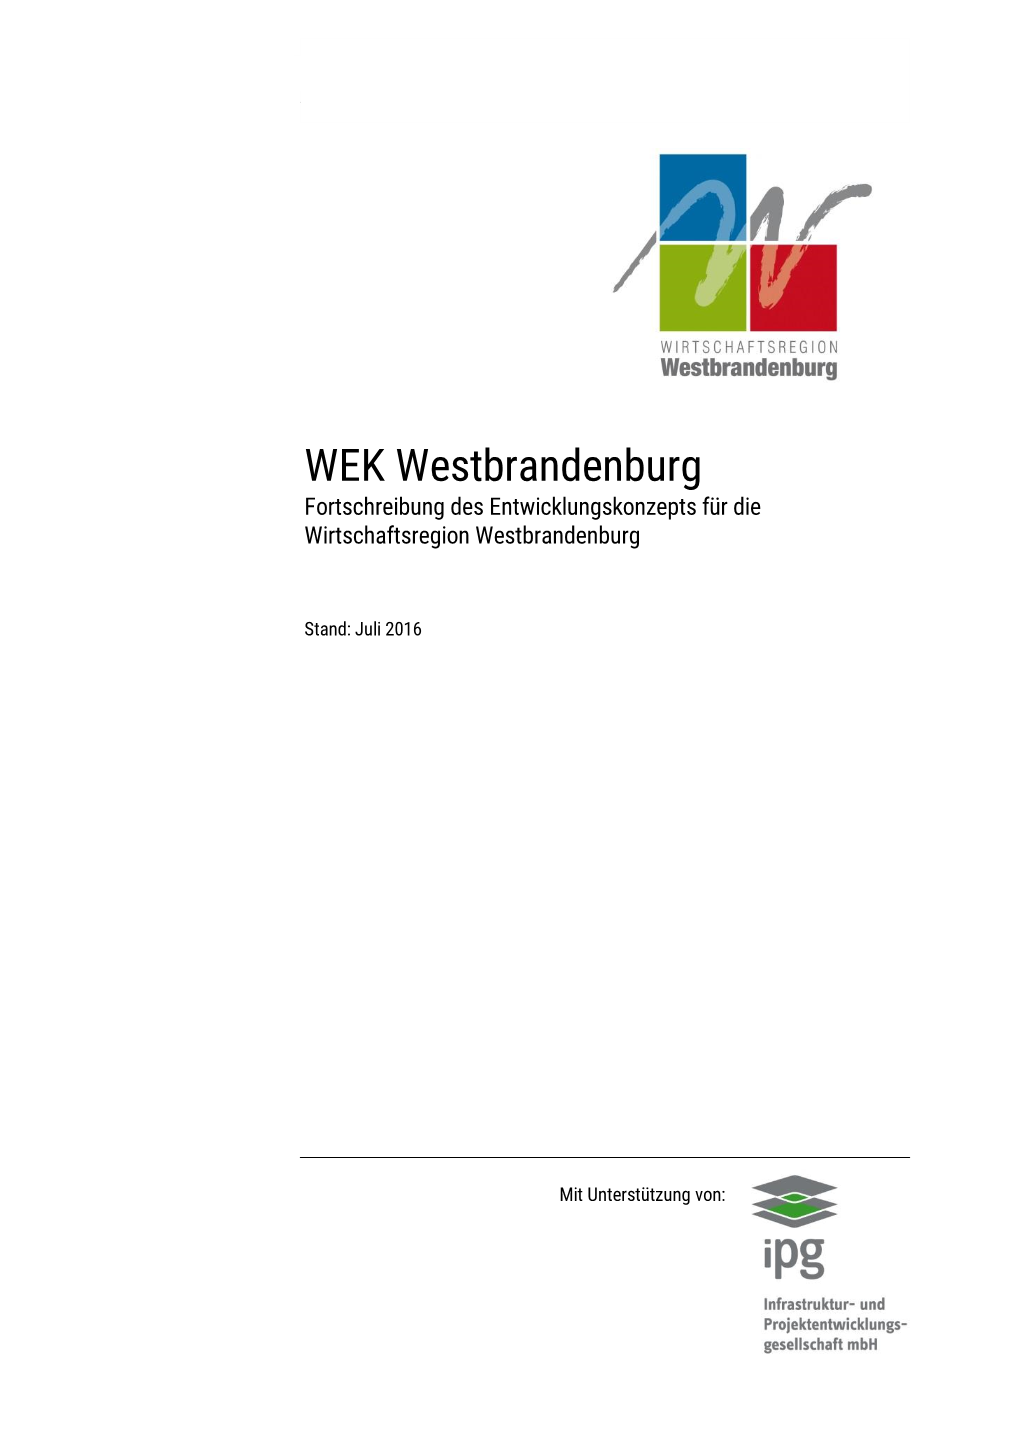 WEK Westbrandenburg